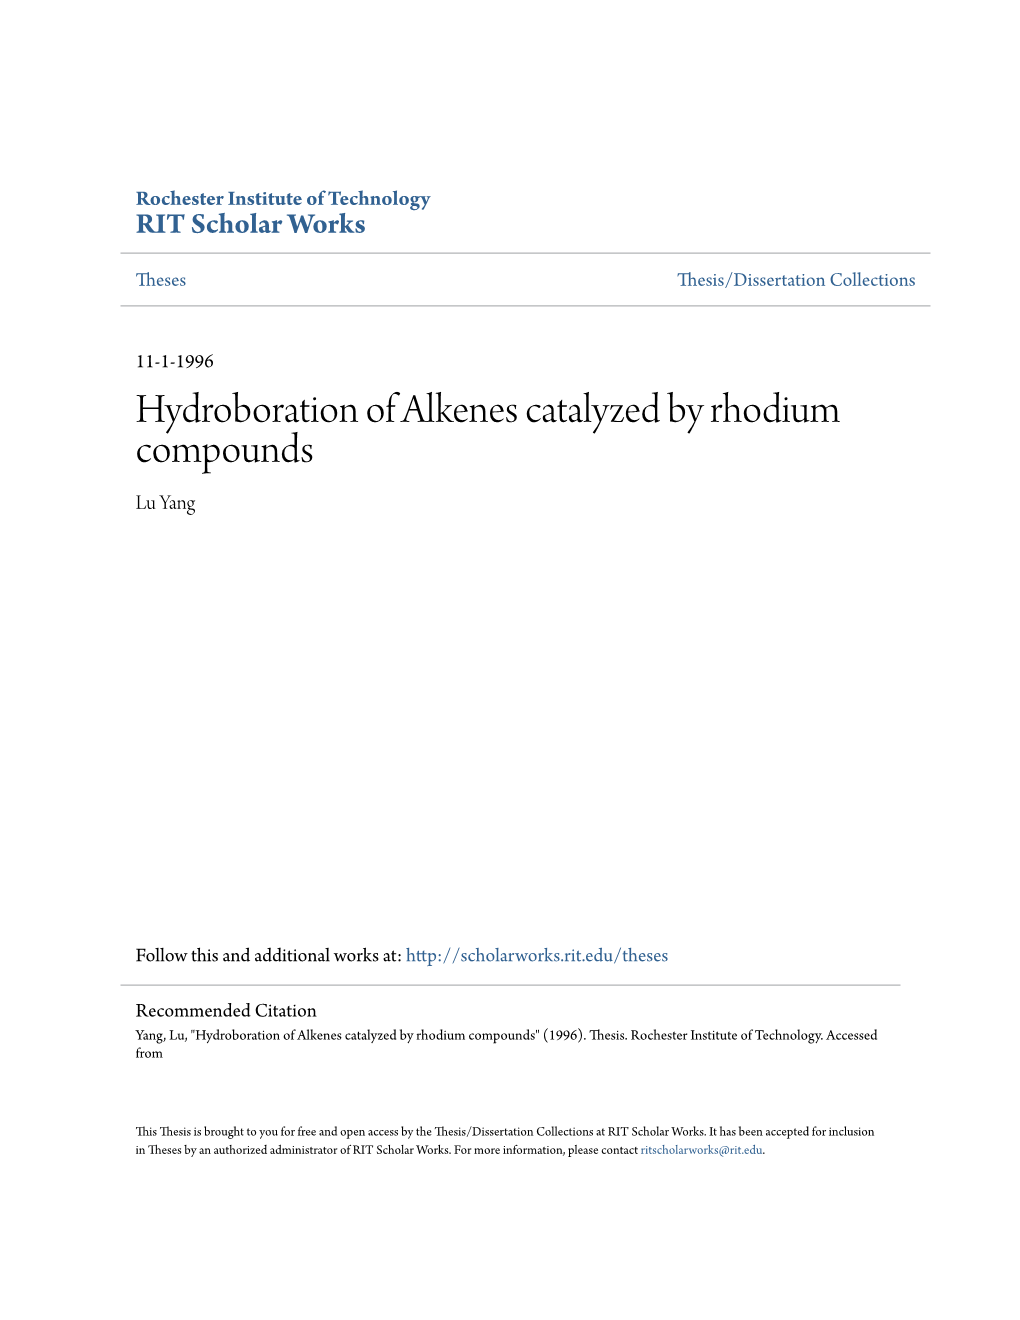 Hydroboration of Alkenes Catalyzed by Rhodium Compounds Lu Yang